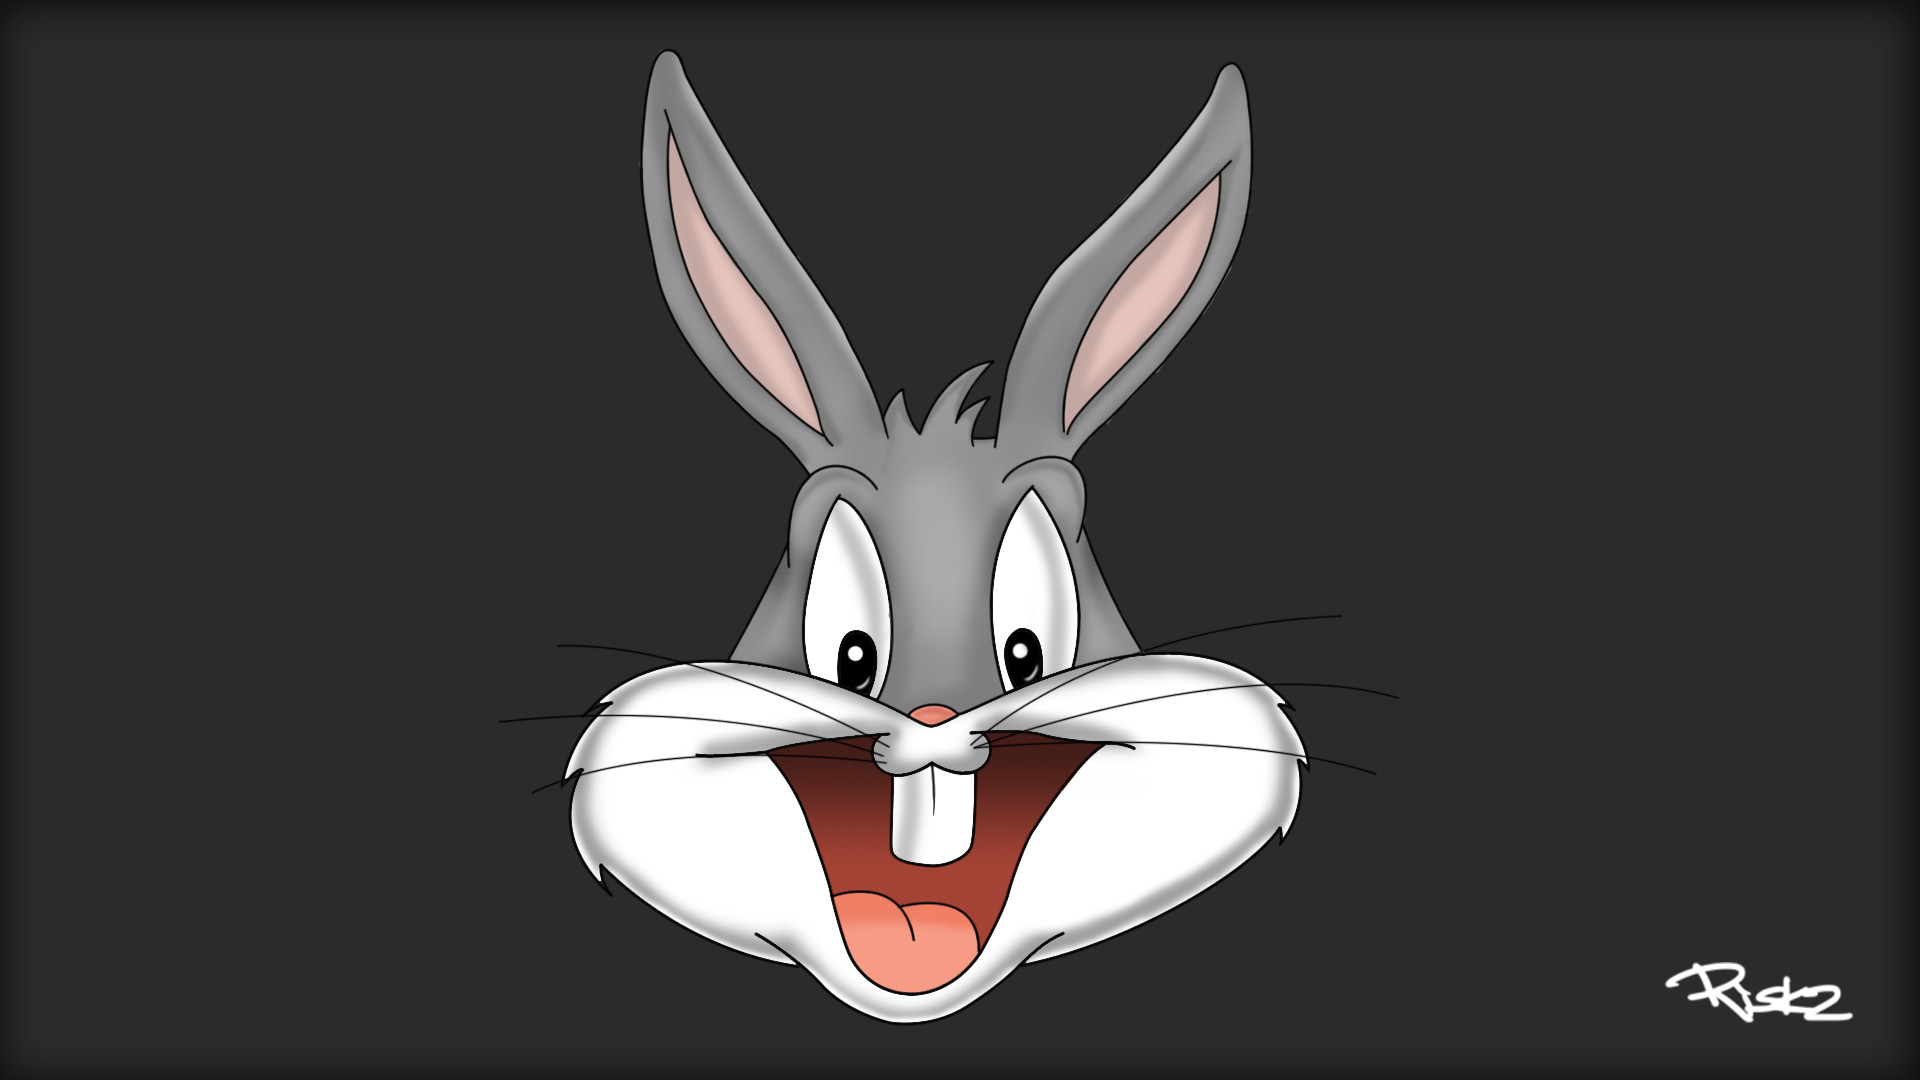 1920x1080 Bugs Bunny Backgrounds | LyhyXX.com Bugs Bunny